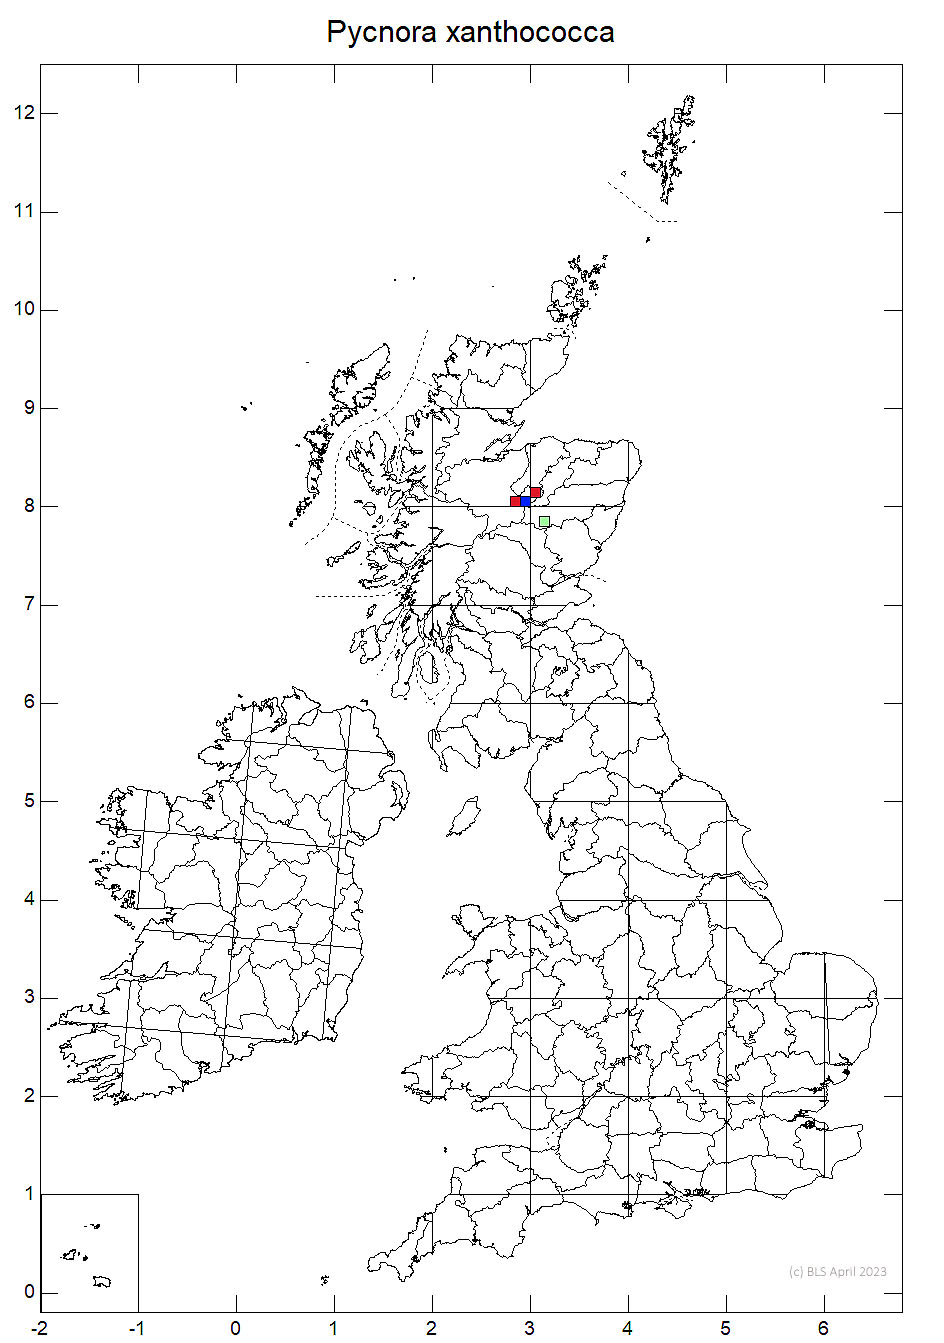 Pycnora xanthococca 10km sq distribution map